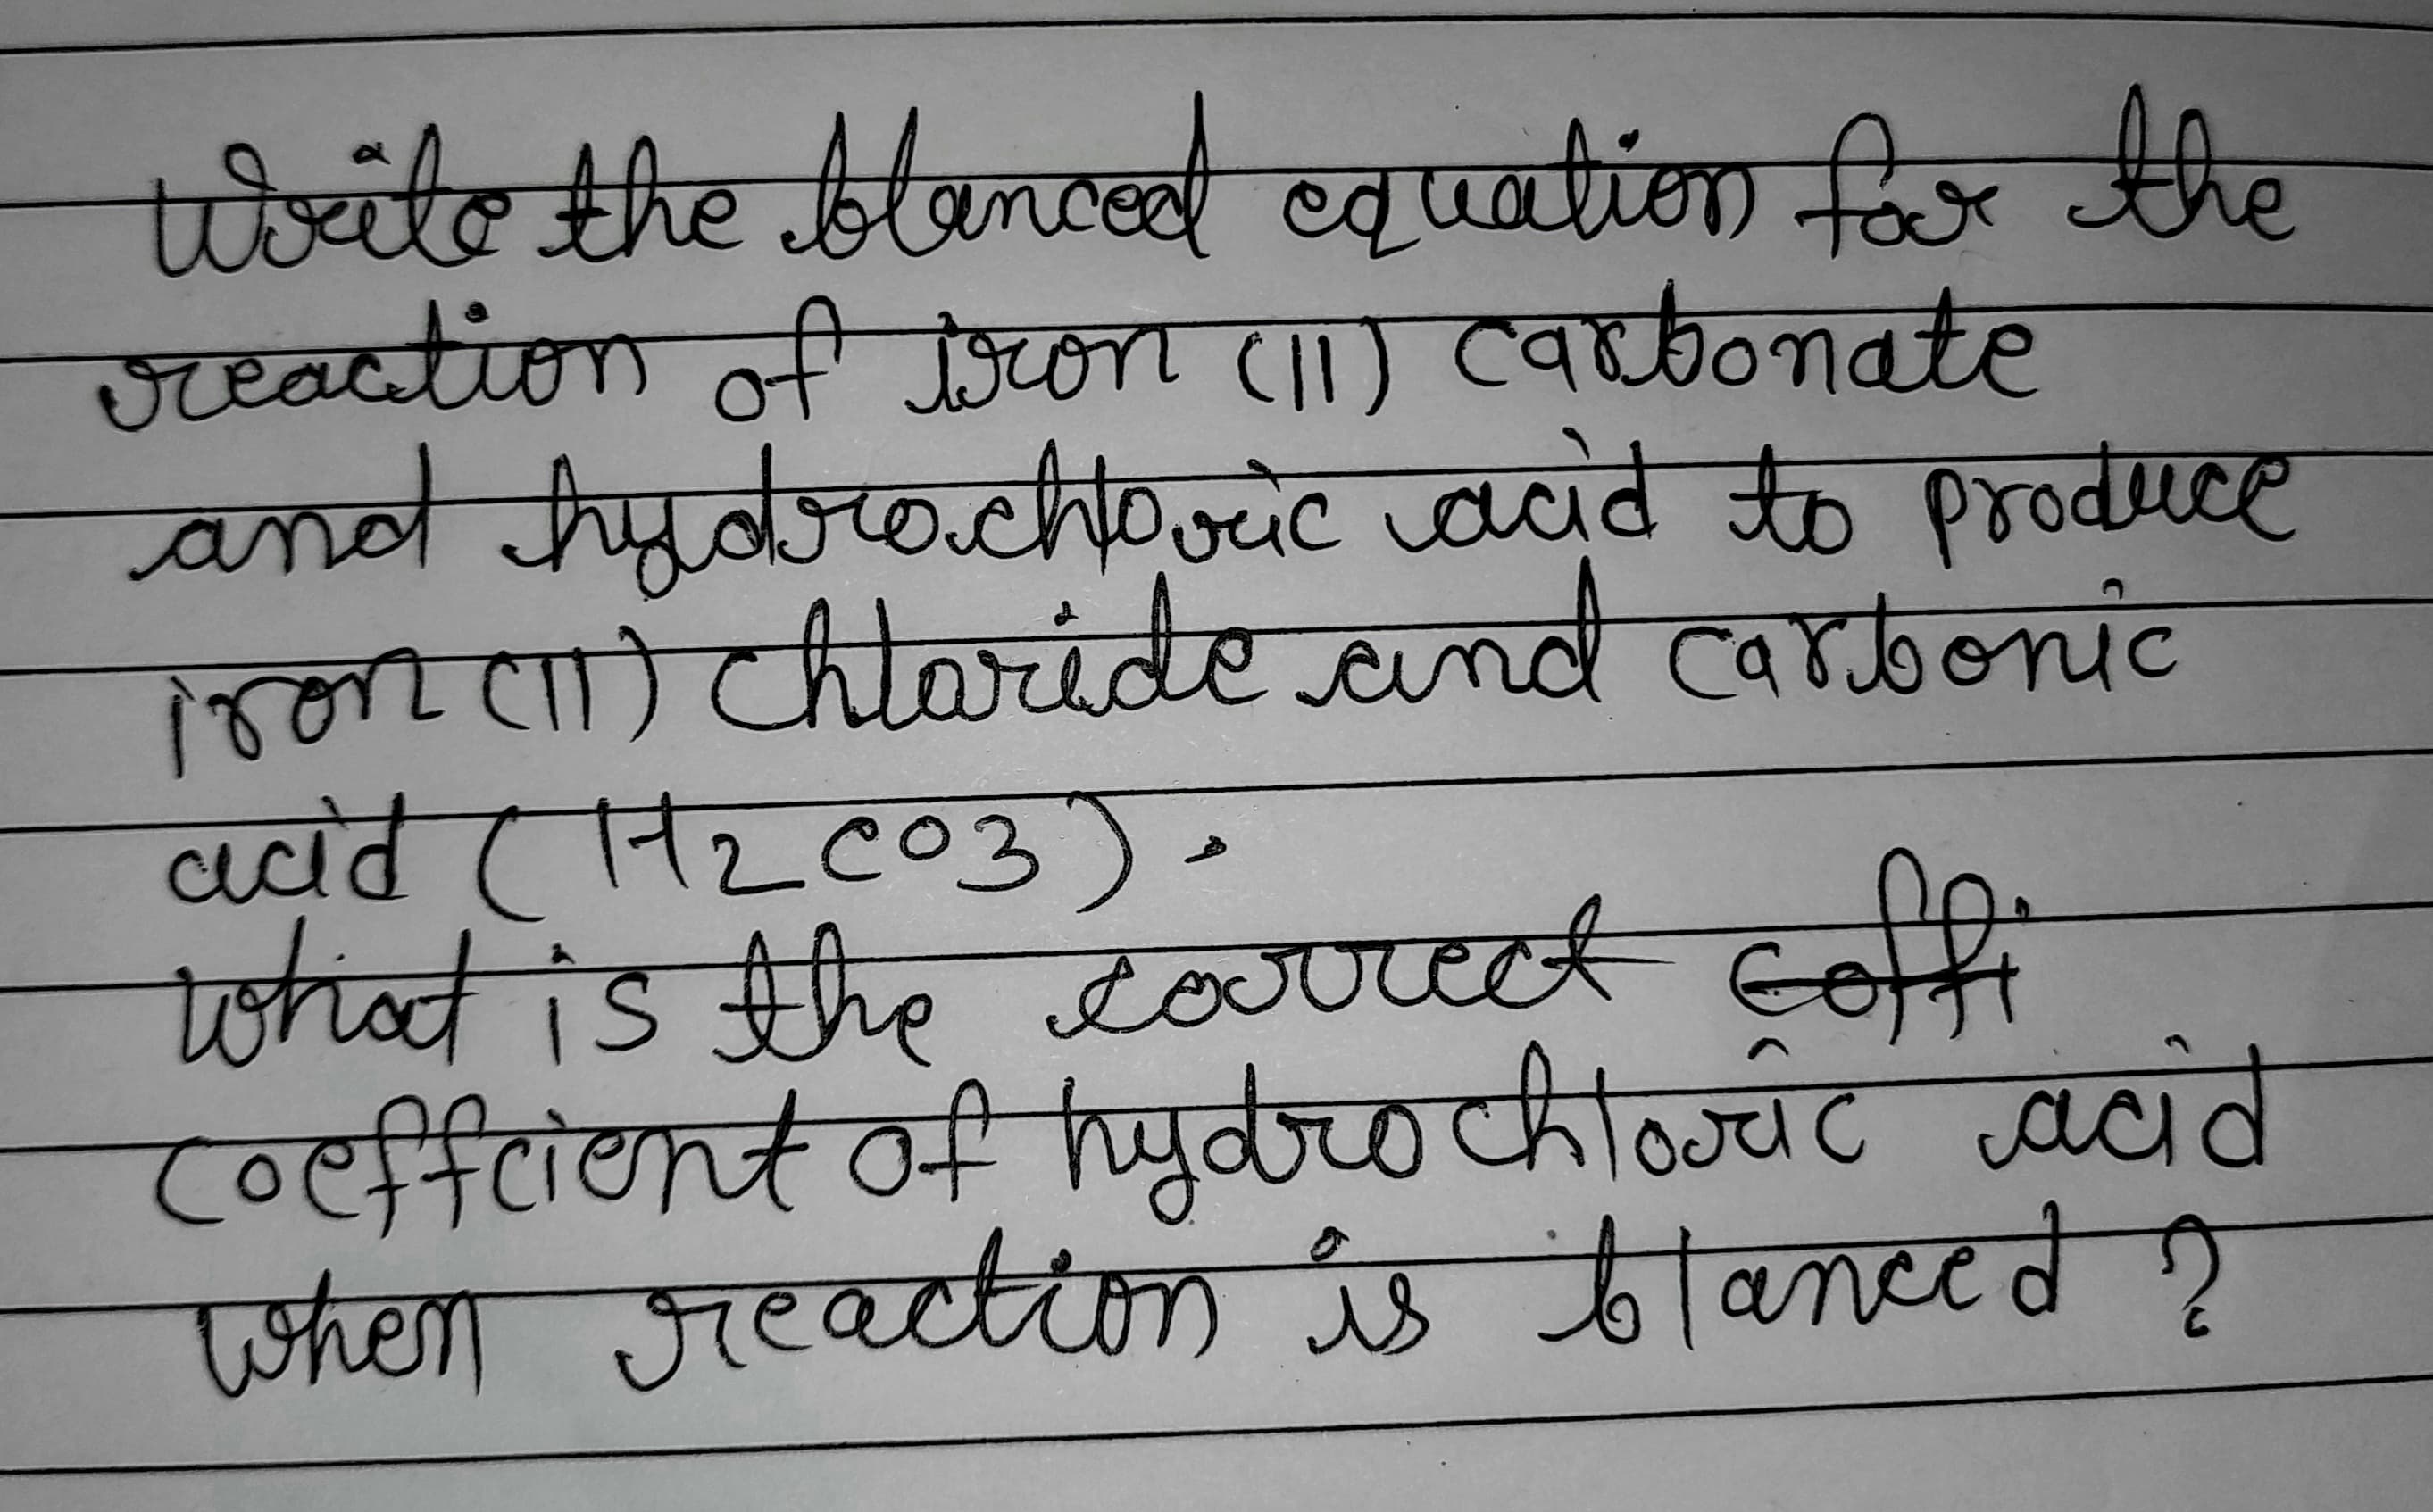 the
t्याक कीह हल ब्बूपणण) हिज व
oreaction of con Cl1) carbonate
and hydrochovic aid to produce
yon torride.cnd
acid (t2co3).
tohatisthe orrect cofi
वडिनविटक रव कन्च्वेट ववd
अंा जरण iTn) गड ळय्edे ?
cartbonic
